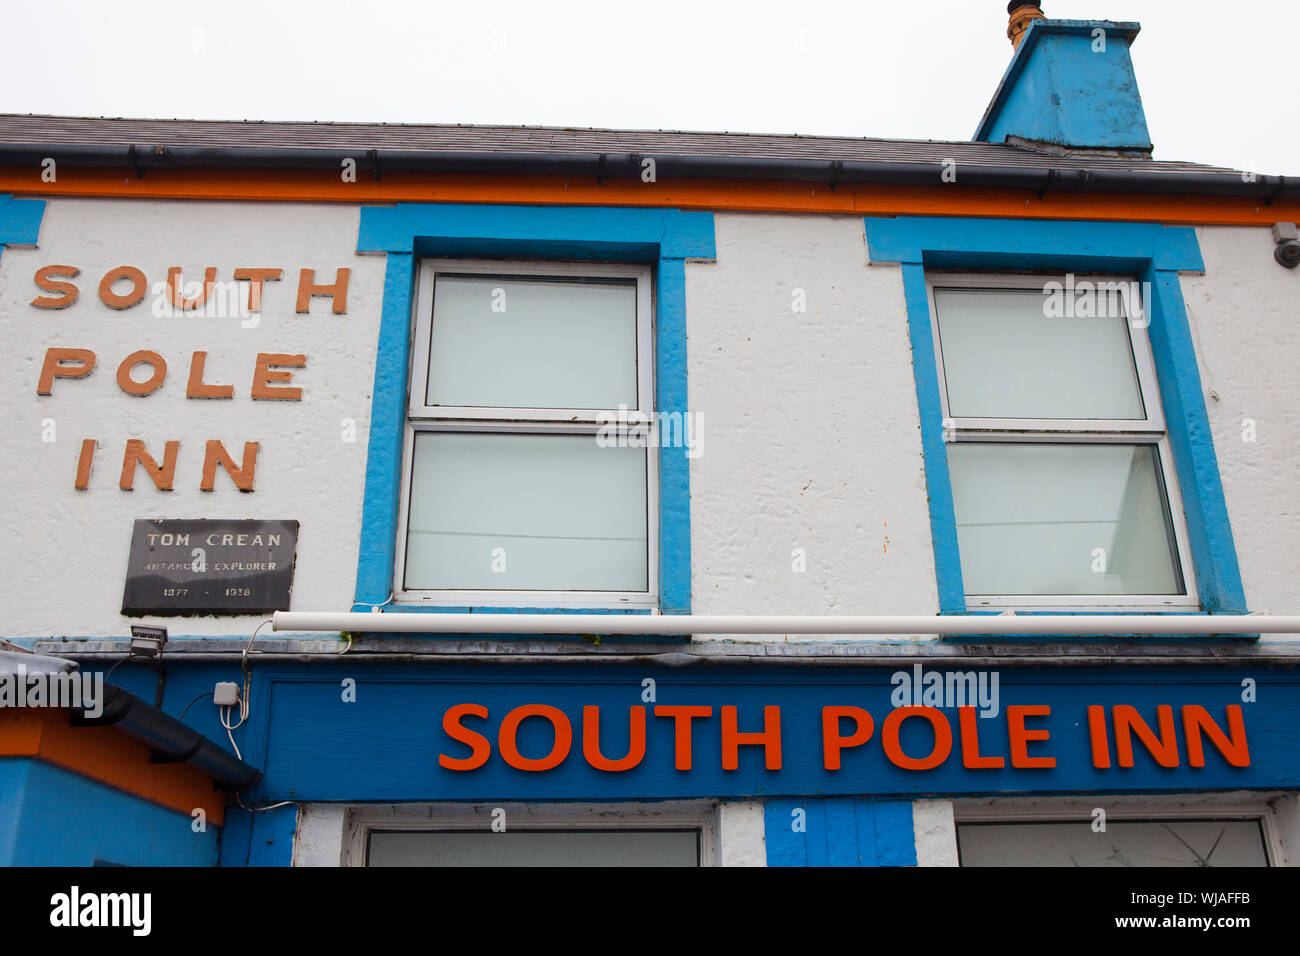 The South Pole Inn, pub owned by polar explorer Tom Crean, Annascaul, Dingle Peninsula, Co. Kerry, Ireland. Stock Photo